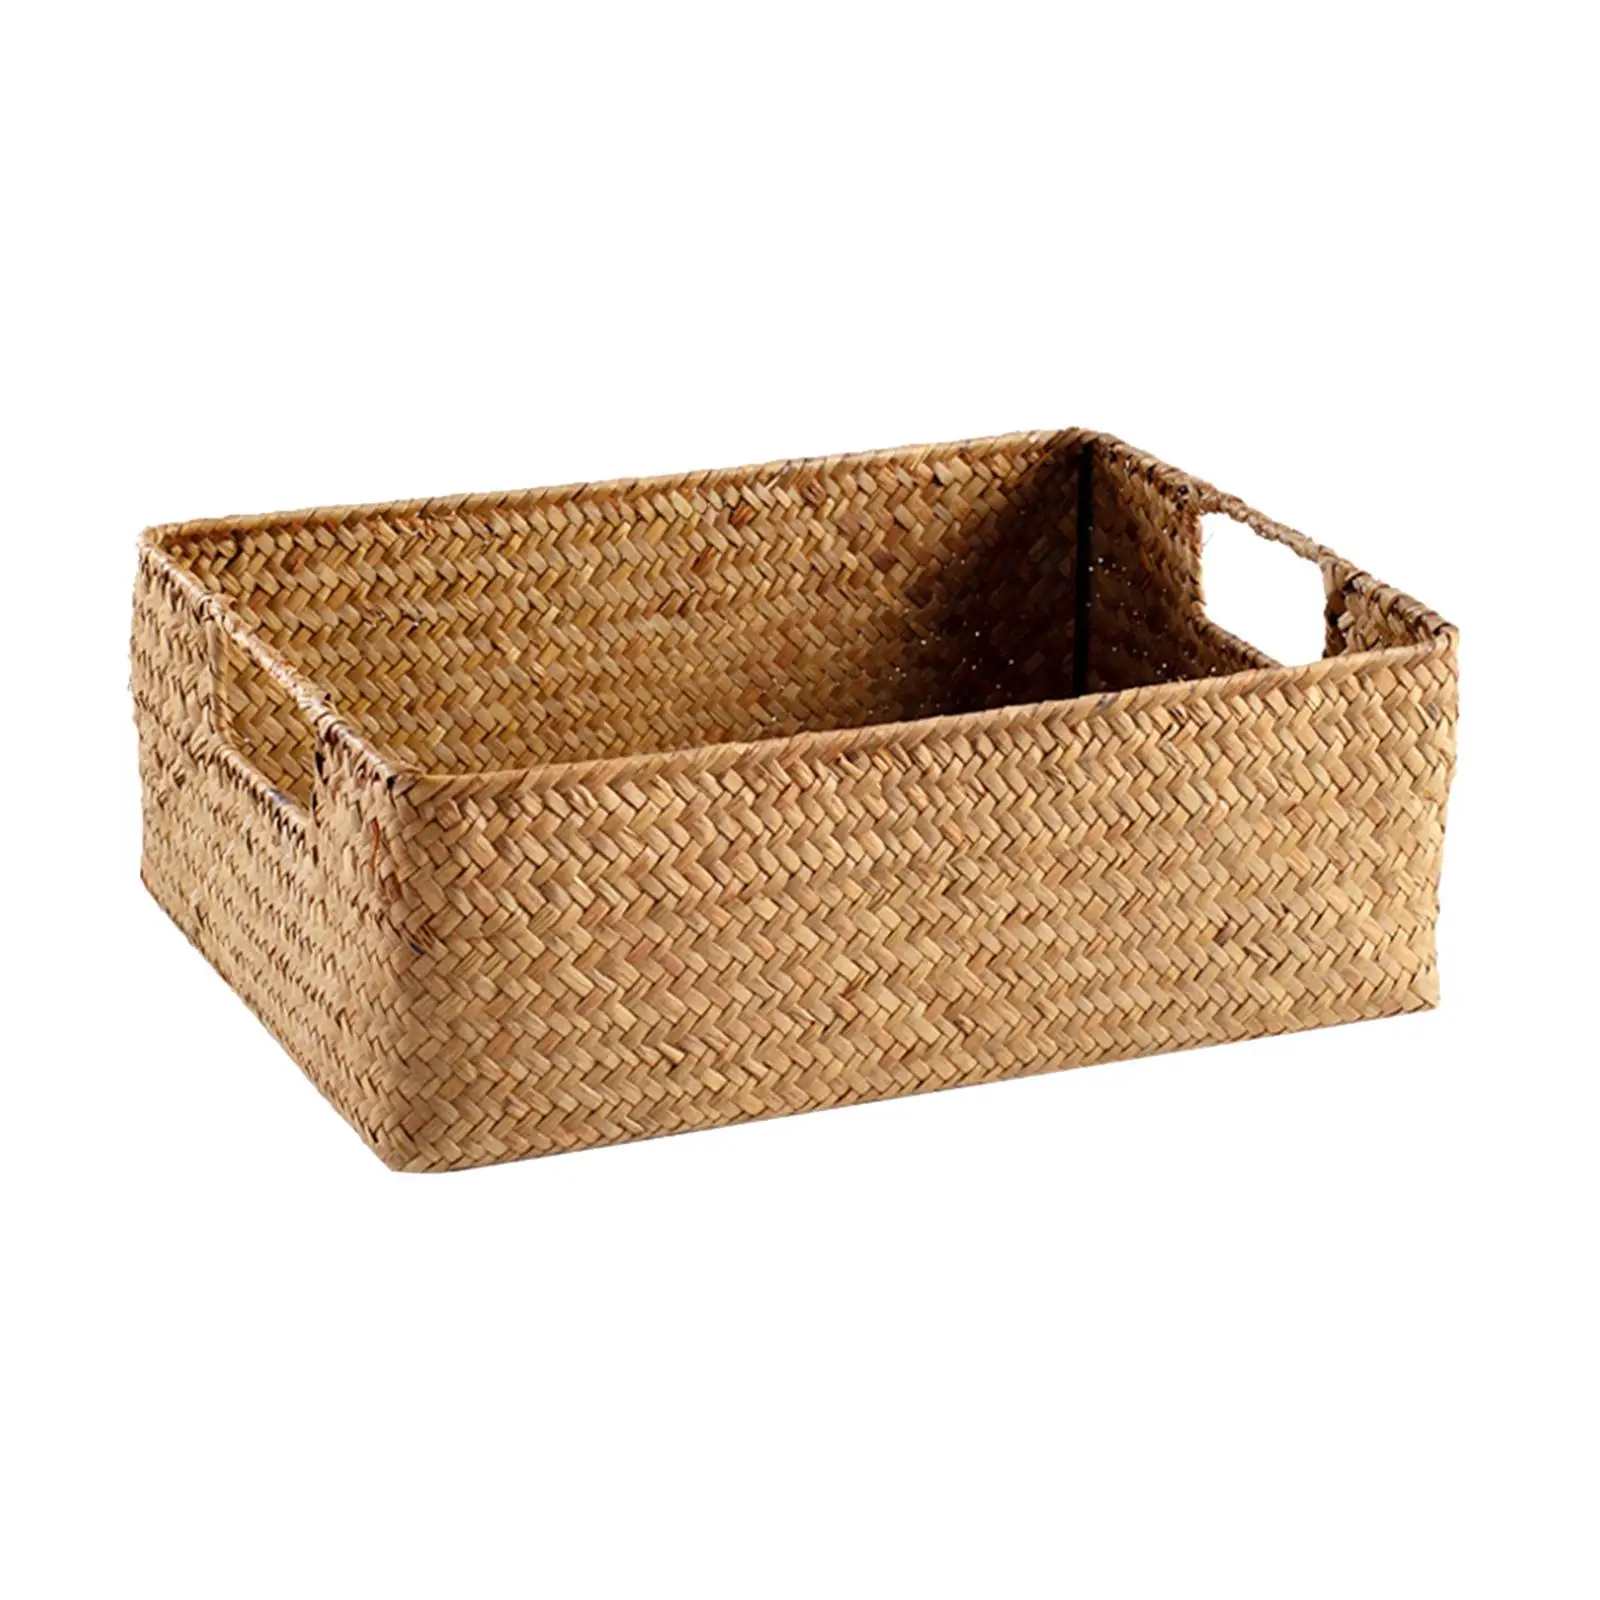 Seagrass Weaving Storage Basket Handwoven Weaving Storage Basket Woven Basket with Handles for Pantry Home Countertop Snacks